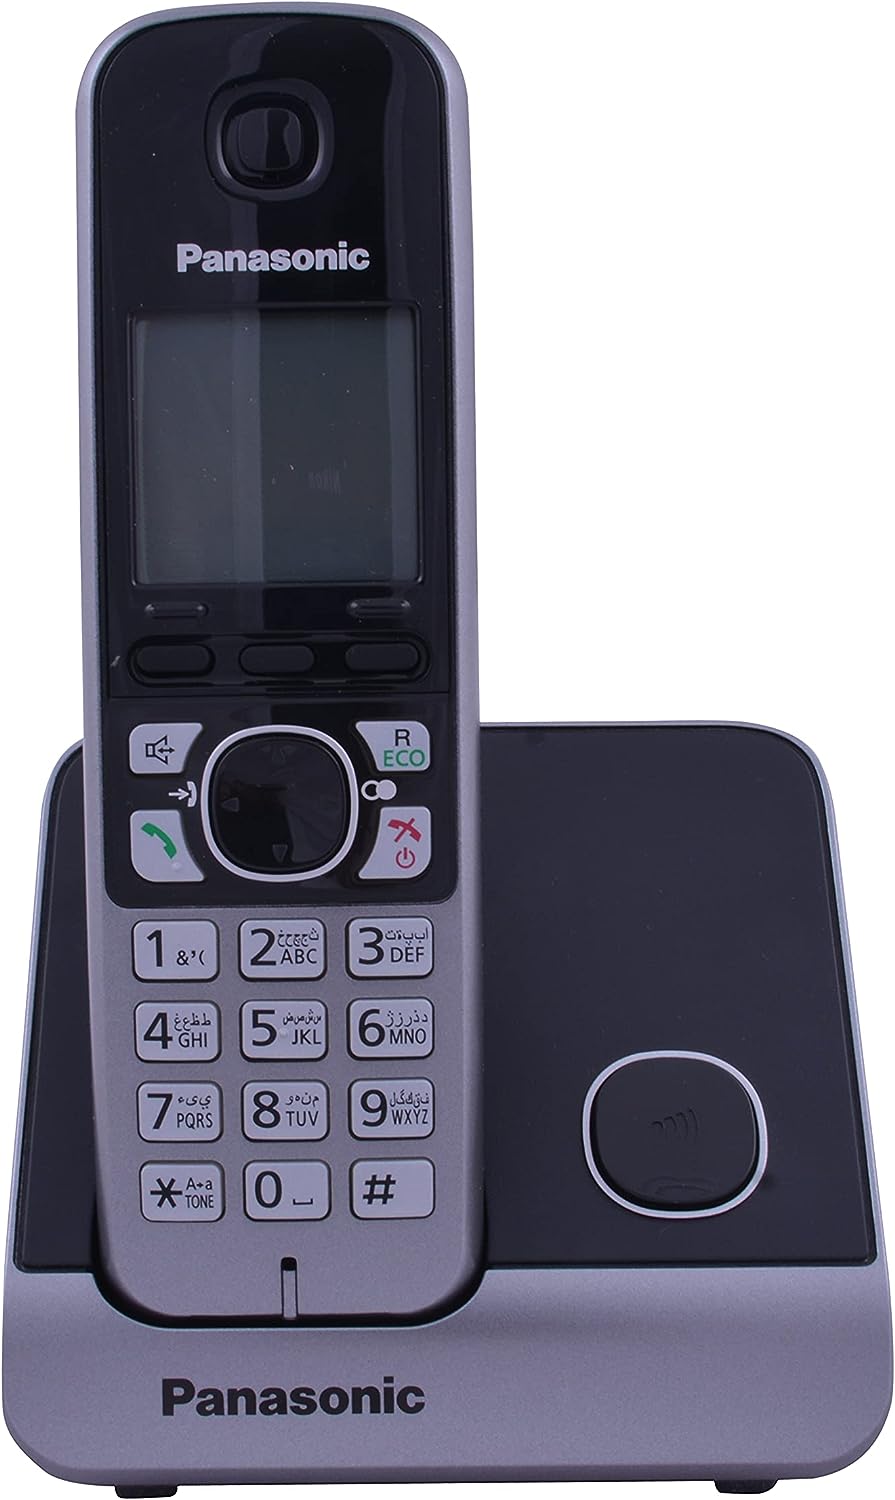 Panasonic Cordless Telephone Made in Malaysia - KX-TG6711